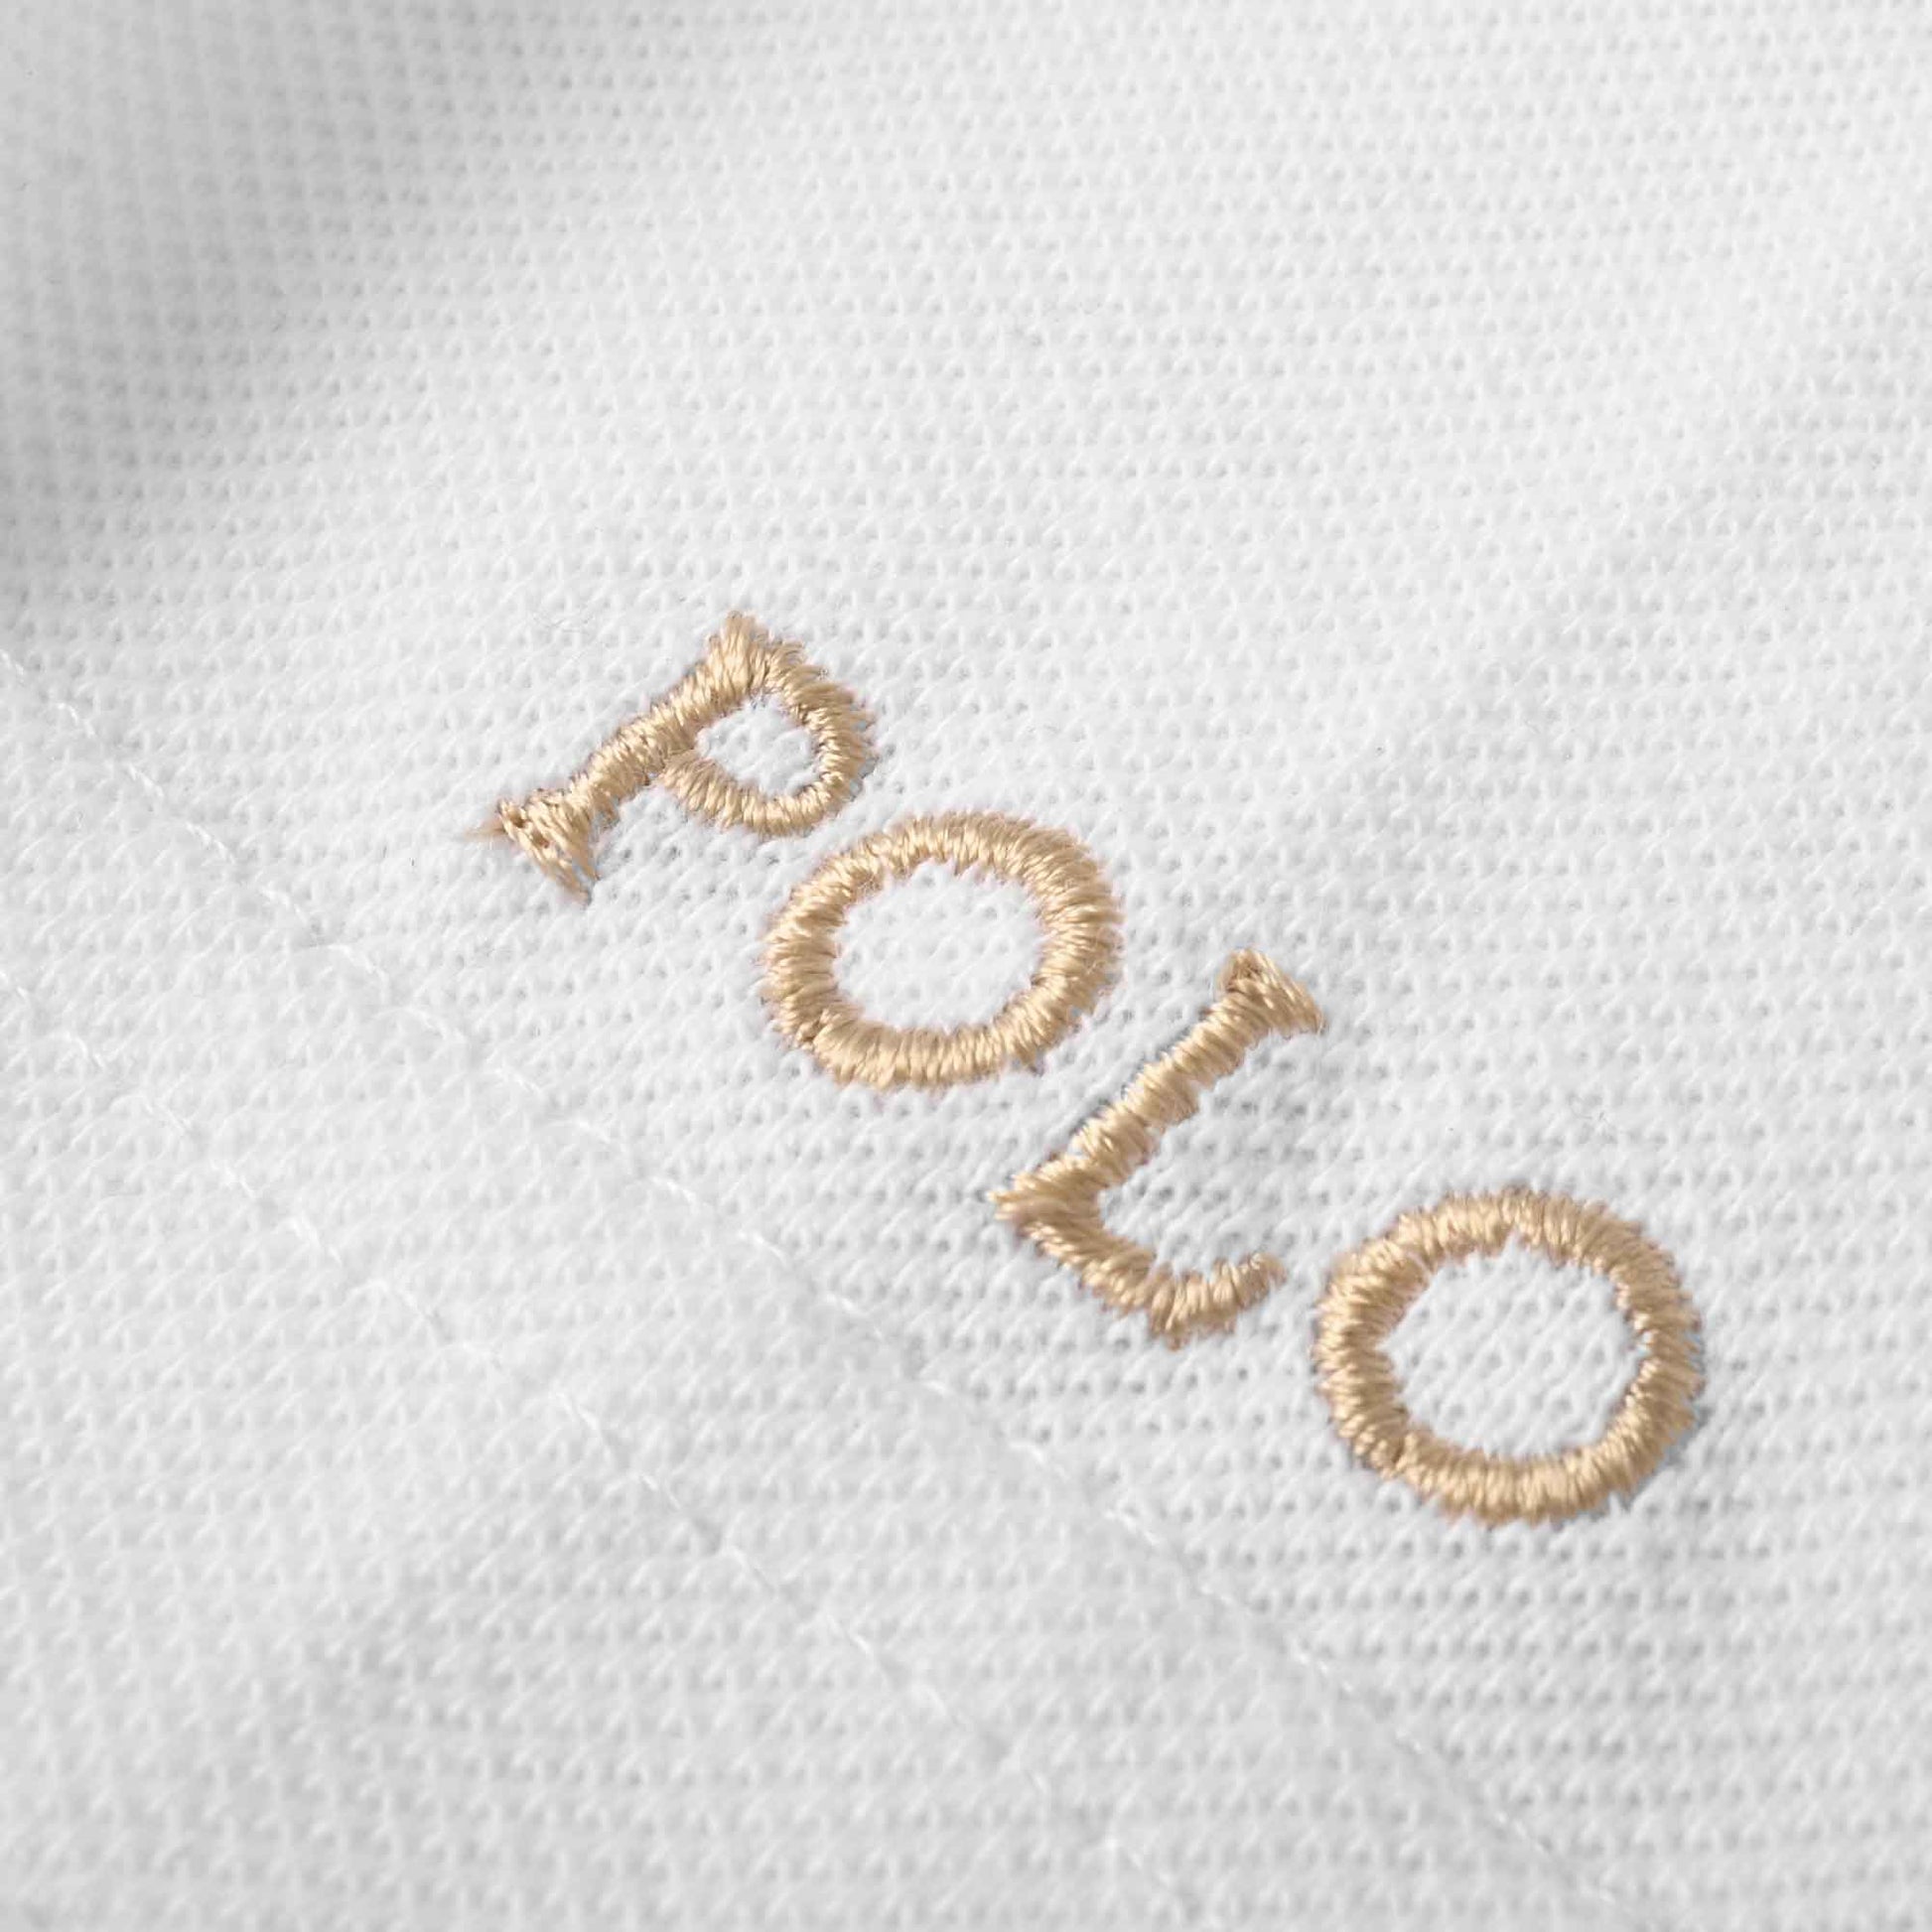 Polo Republica Men's Lion Crest & 9 Polo Embroidered Short Sleeve Polo Shirt Men's Polo Shirt Polo Republica 